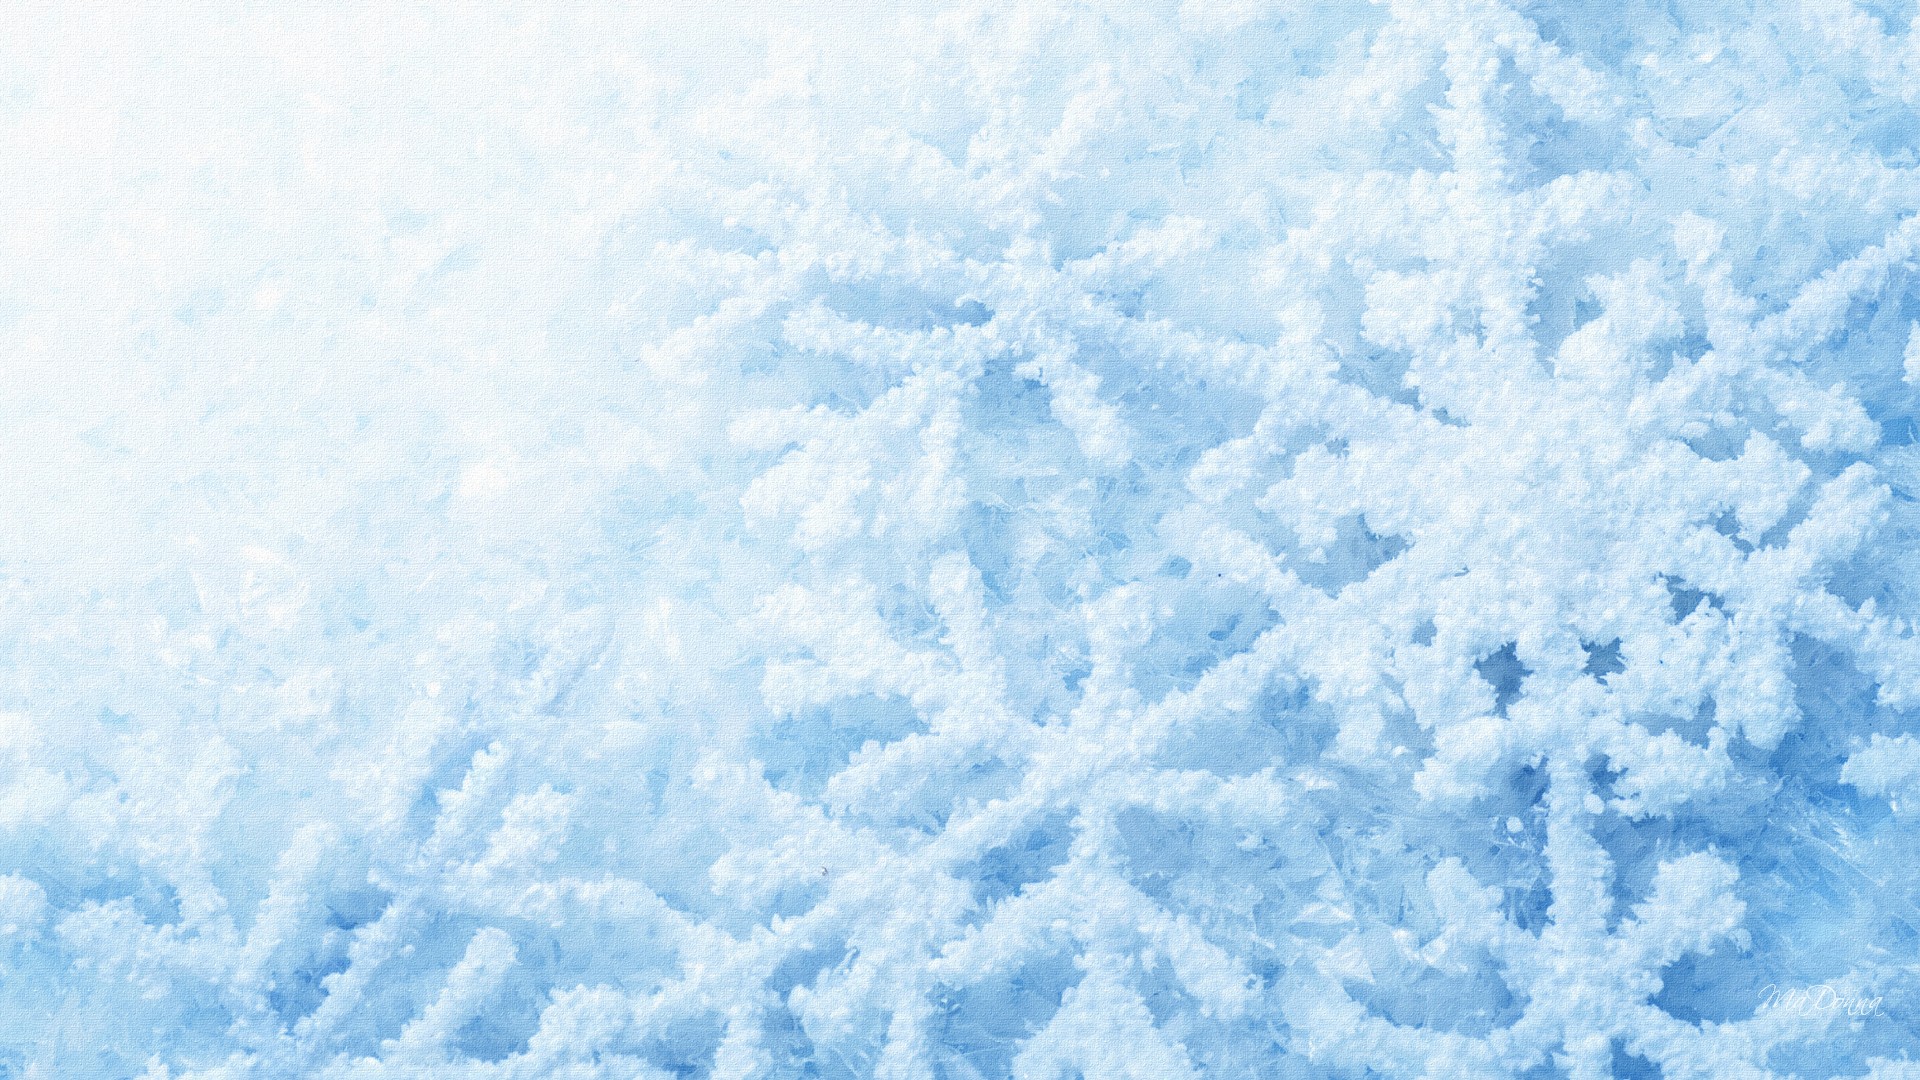 Snowflake Wallpaper Hd Pixelstalk
snowflakes Computer - Extreme Cold Temperatures , HD Wallpaper & Backgrounds